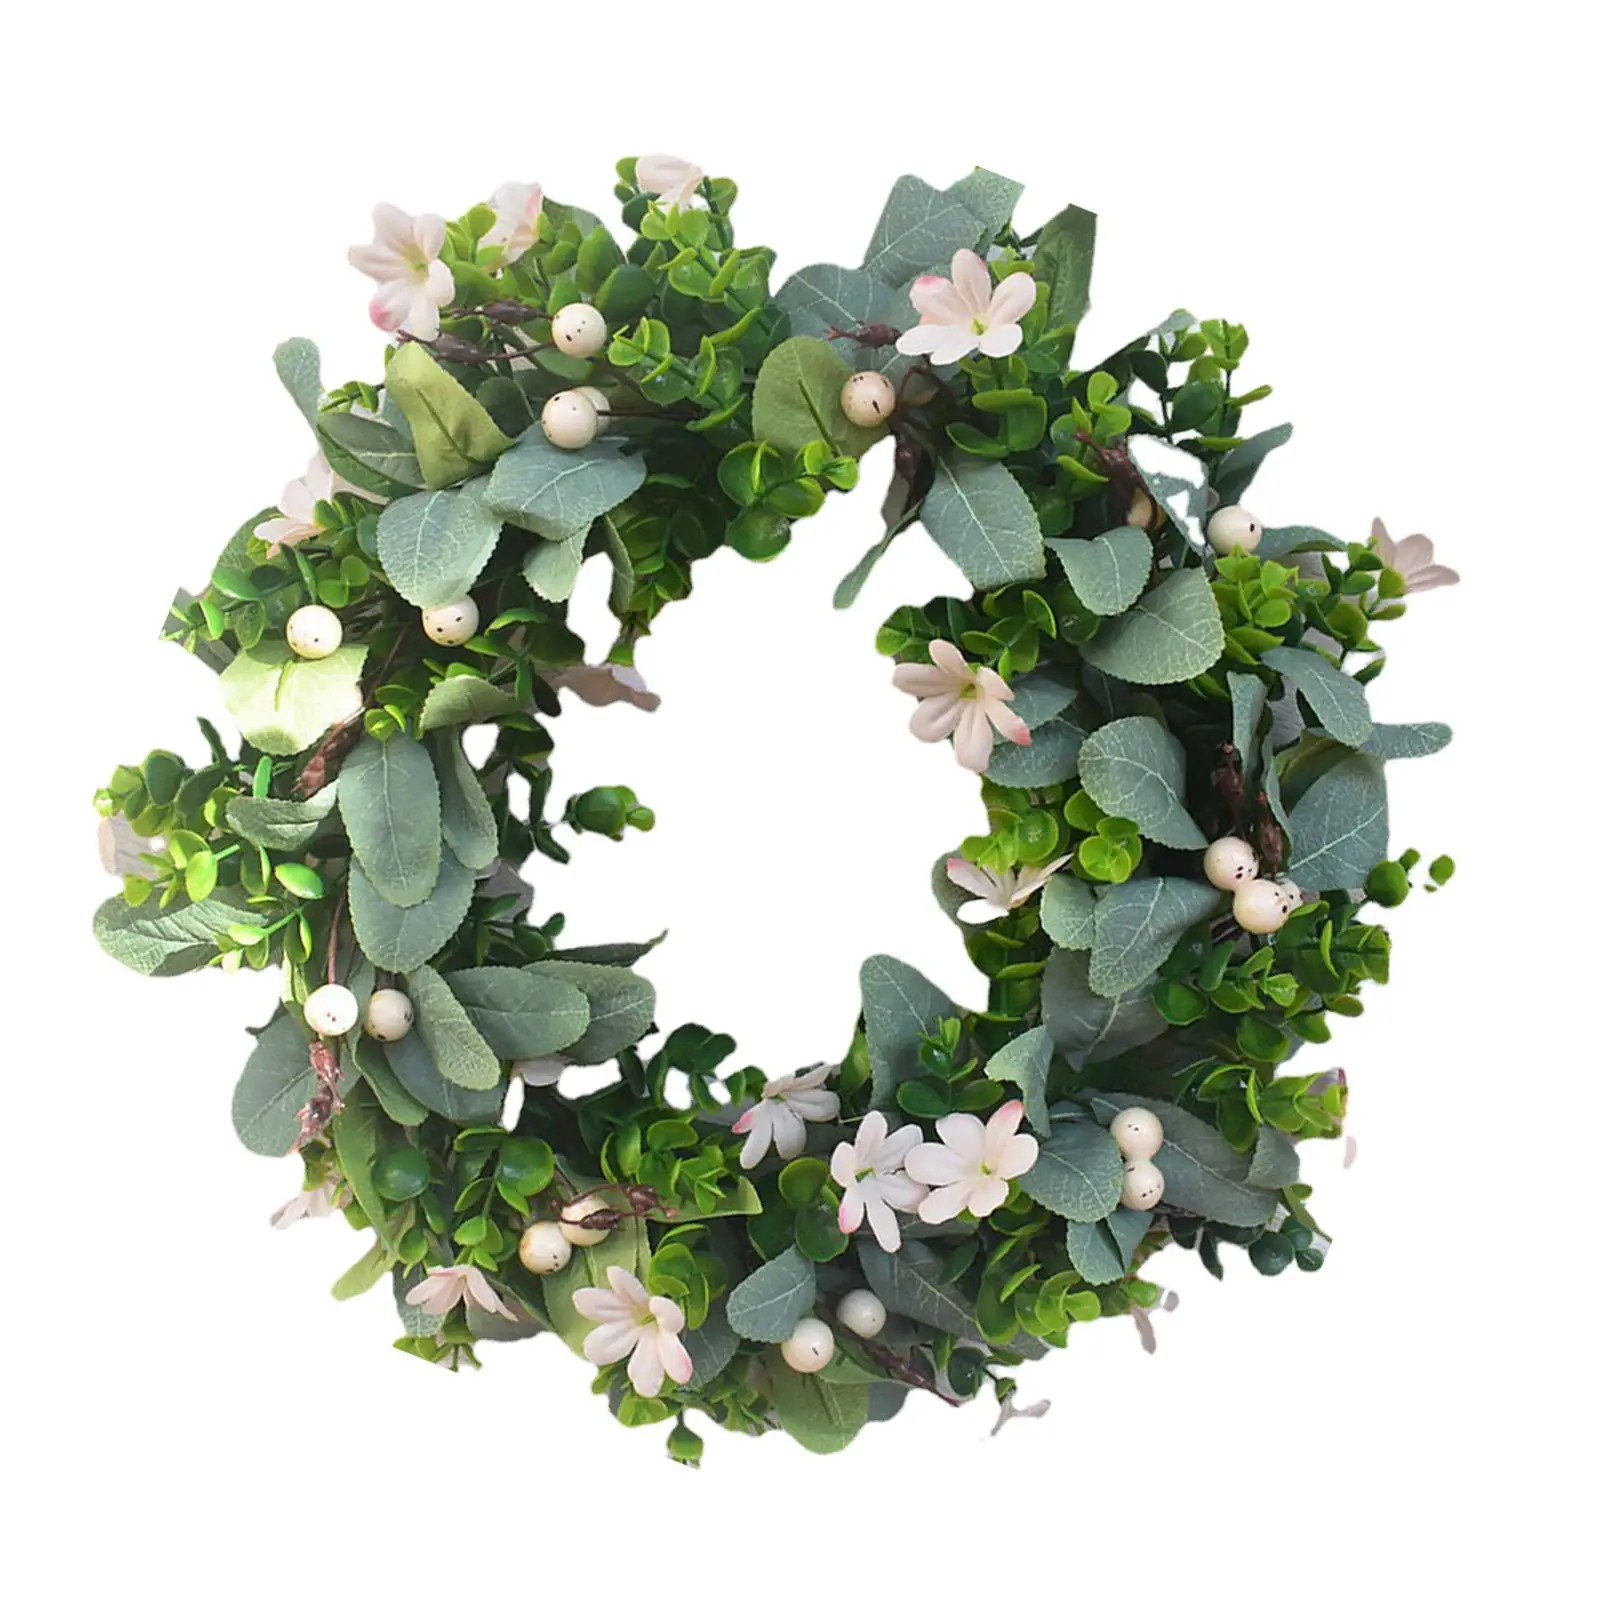 42cm Artificial Wreath Floral Garland Handmade for Hanging Decor